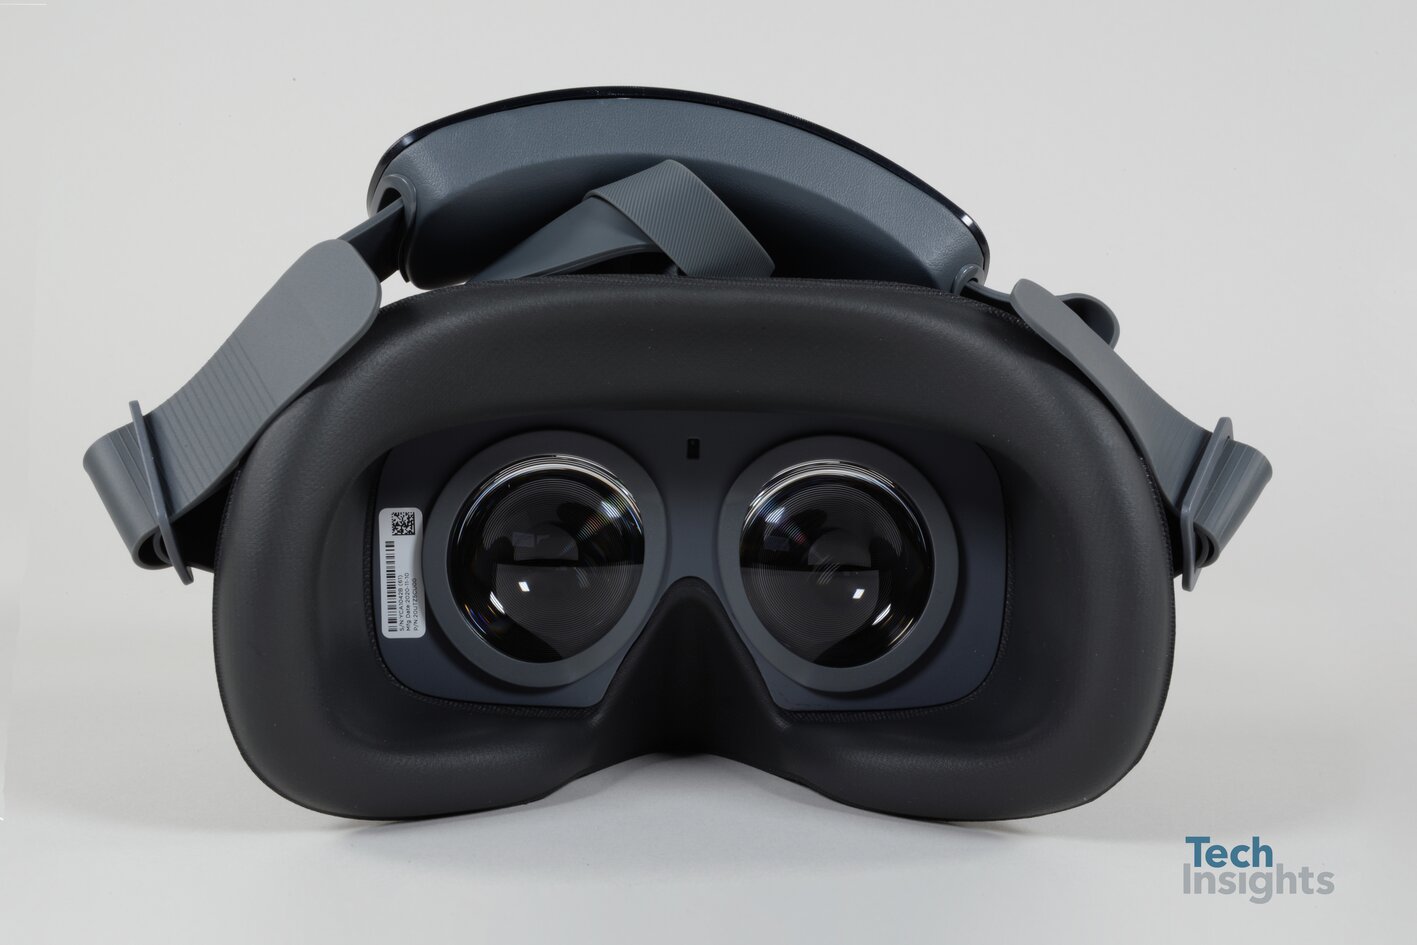 Teardown: Lenovo Mirage VR S3 headset | TechInsights